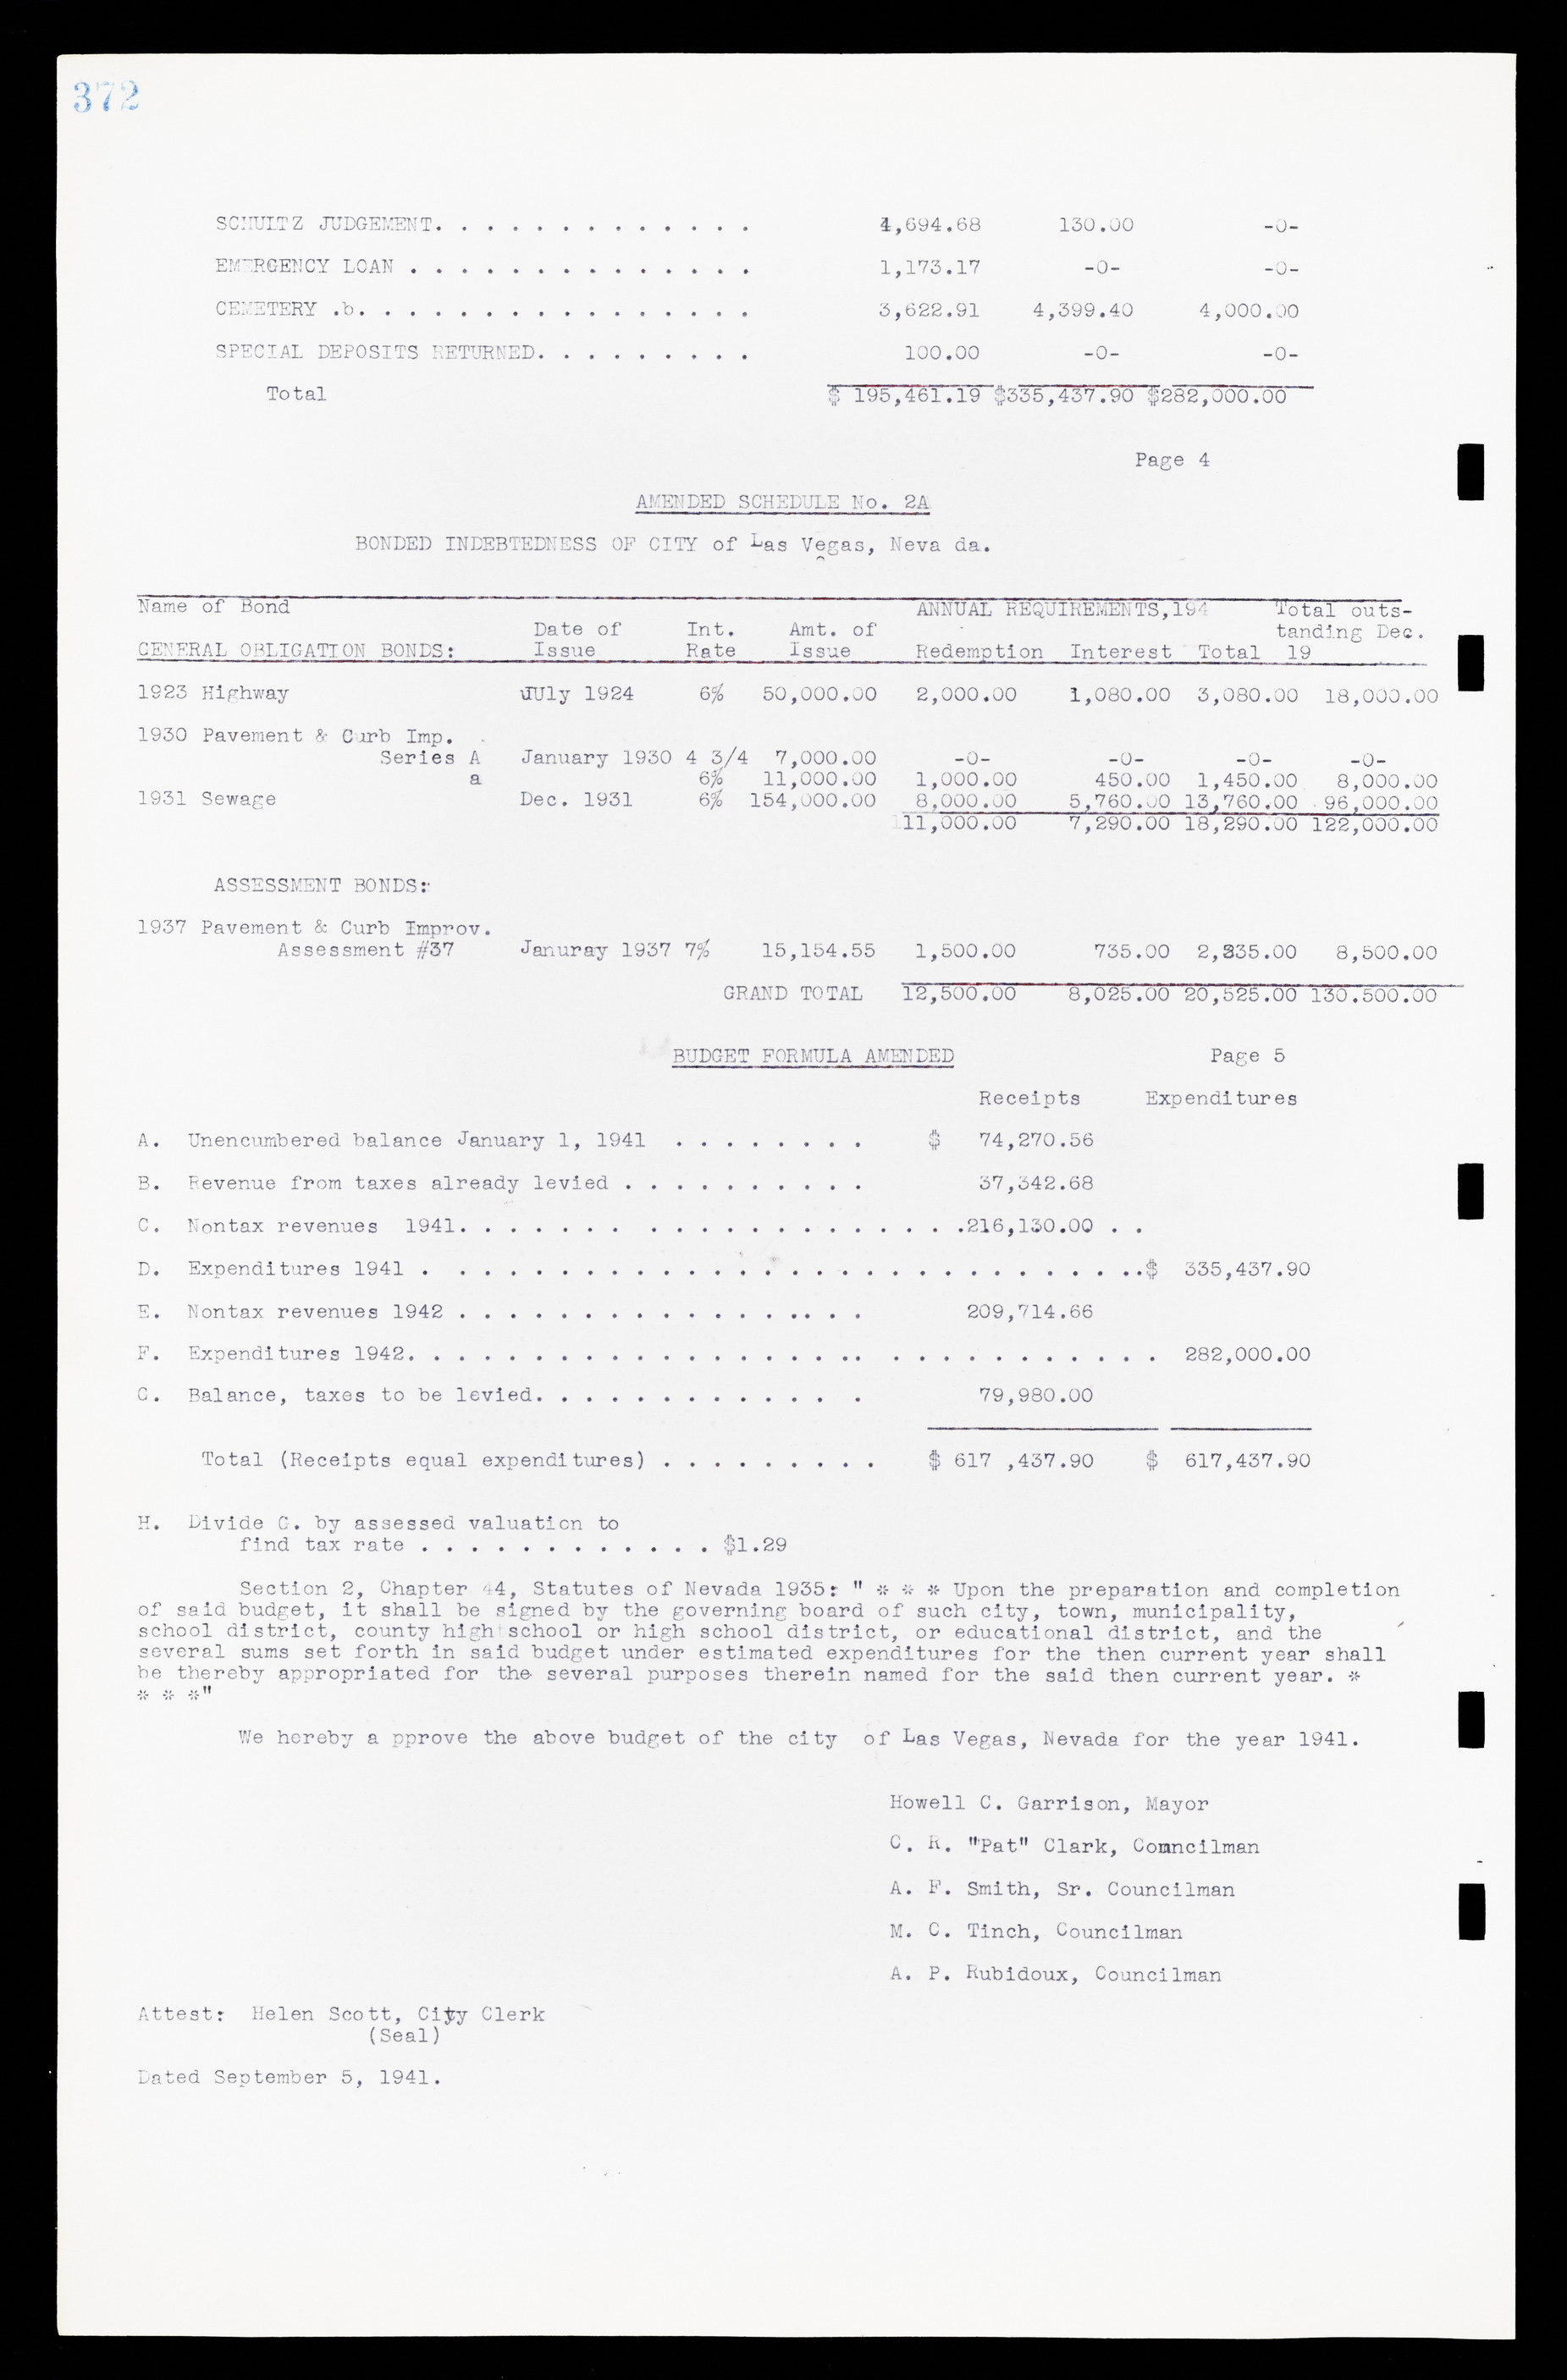 Las Vegas City Commission Minutes, February 17, 1937 to August 4, 1942, lvc000004-398